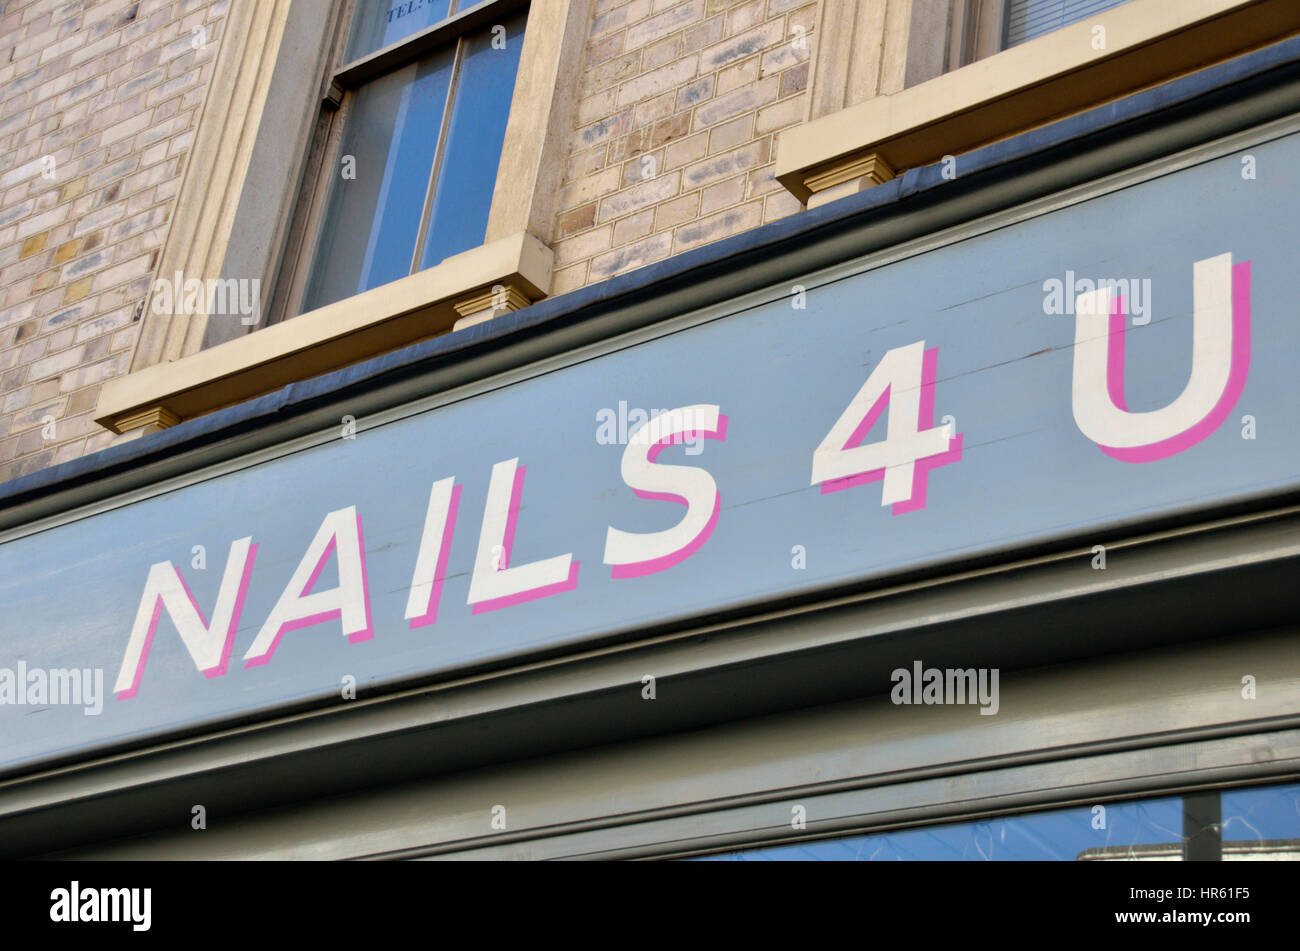 nails 4 u sign outside a nail salon HR61F5